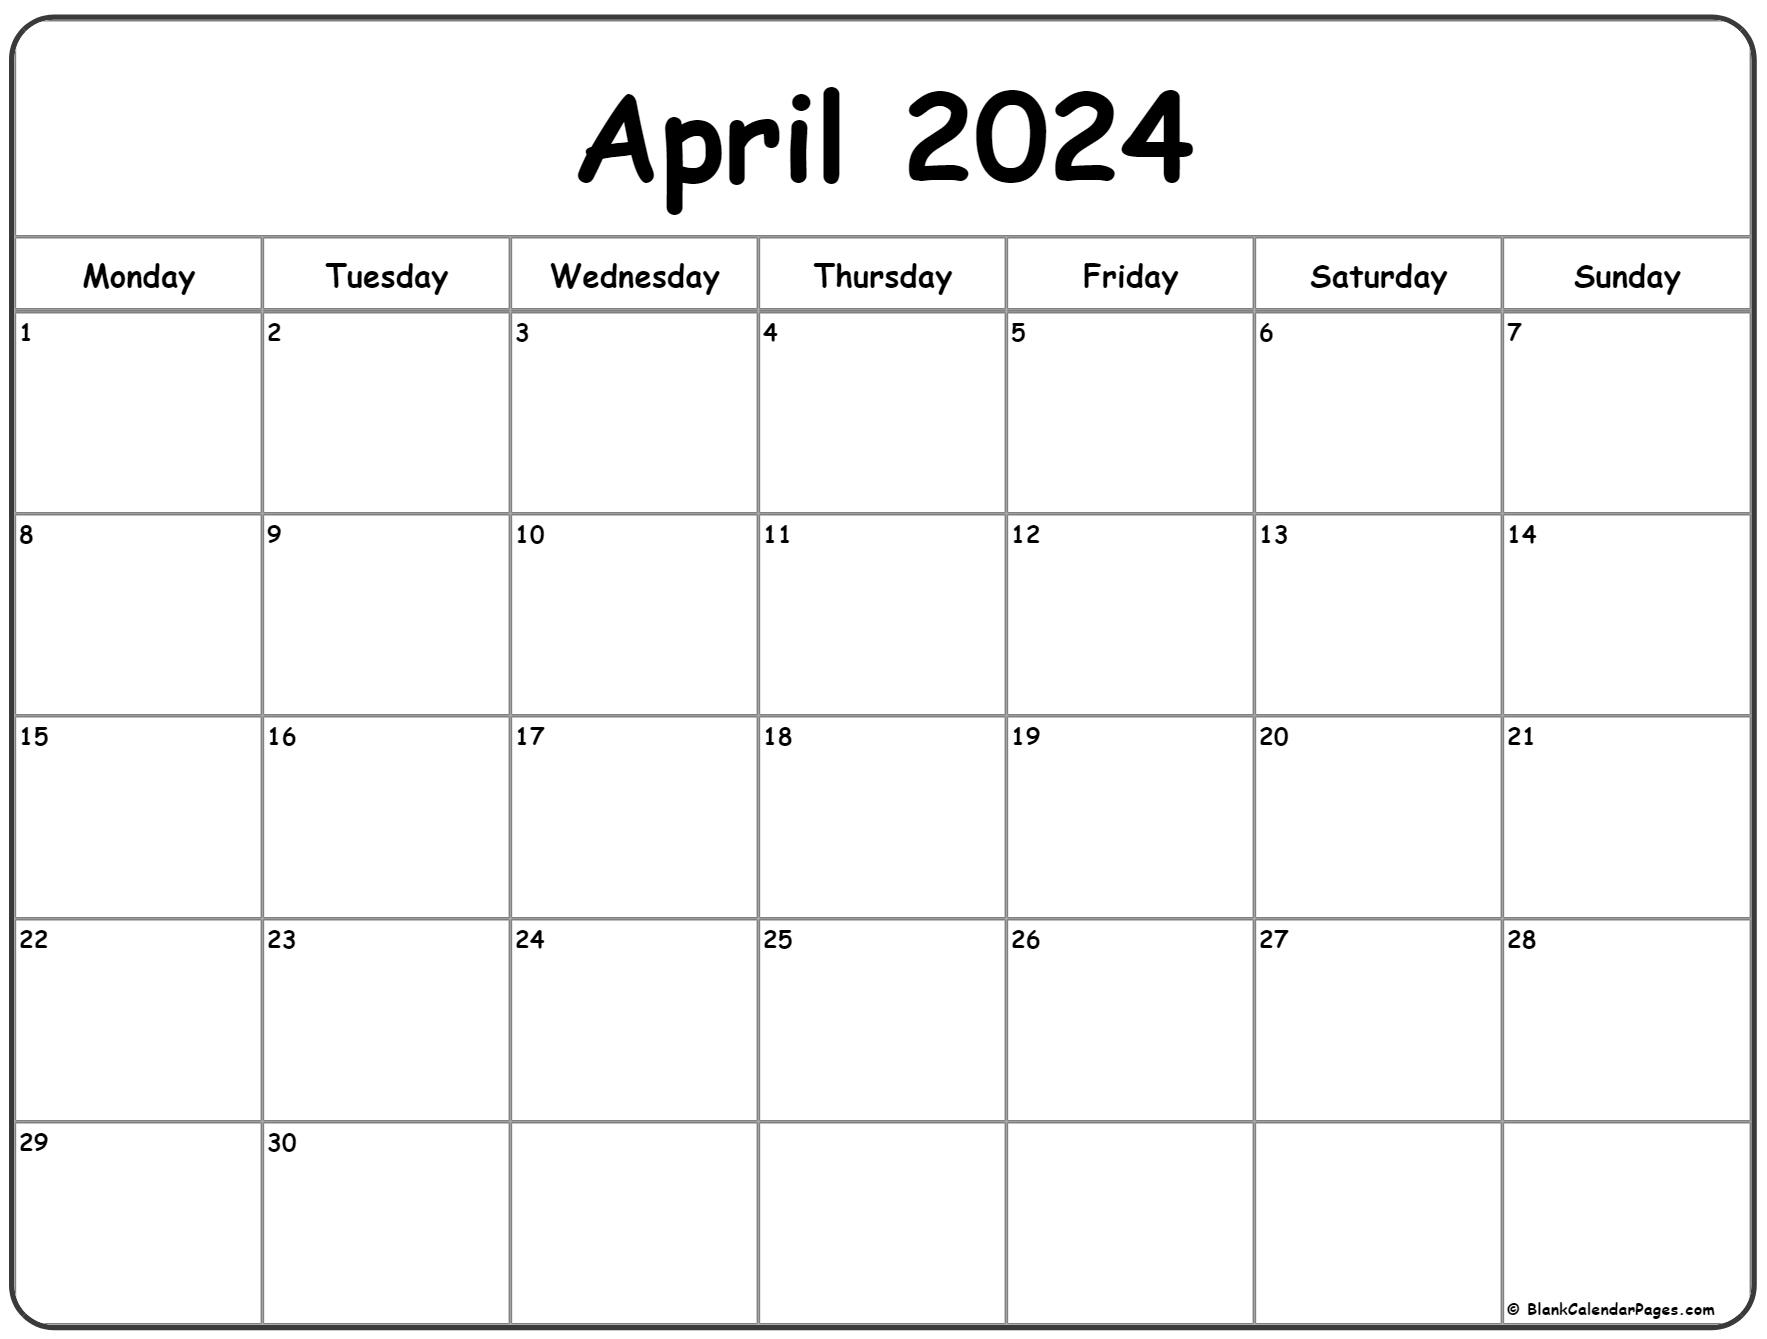 April 2024 Monday Calendar | Monday To Sunday for April 2024 Blank Calendar Printable